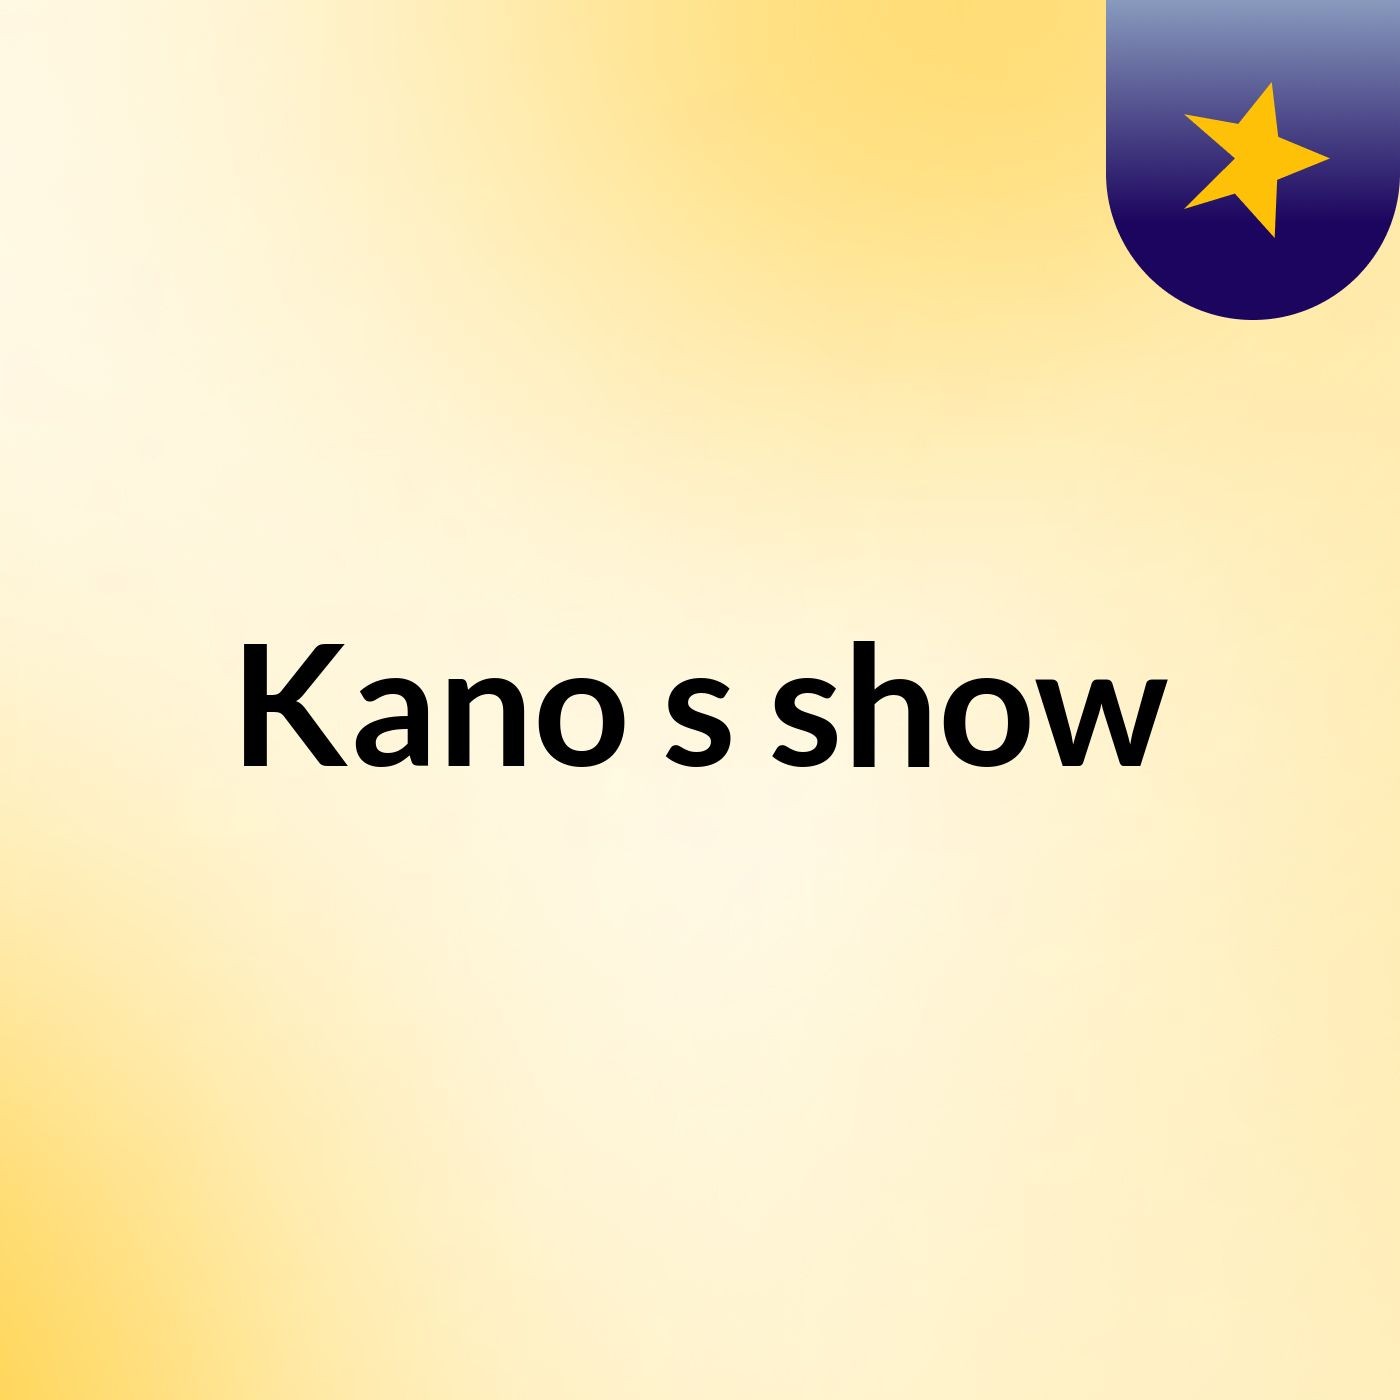 Kano's show